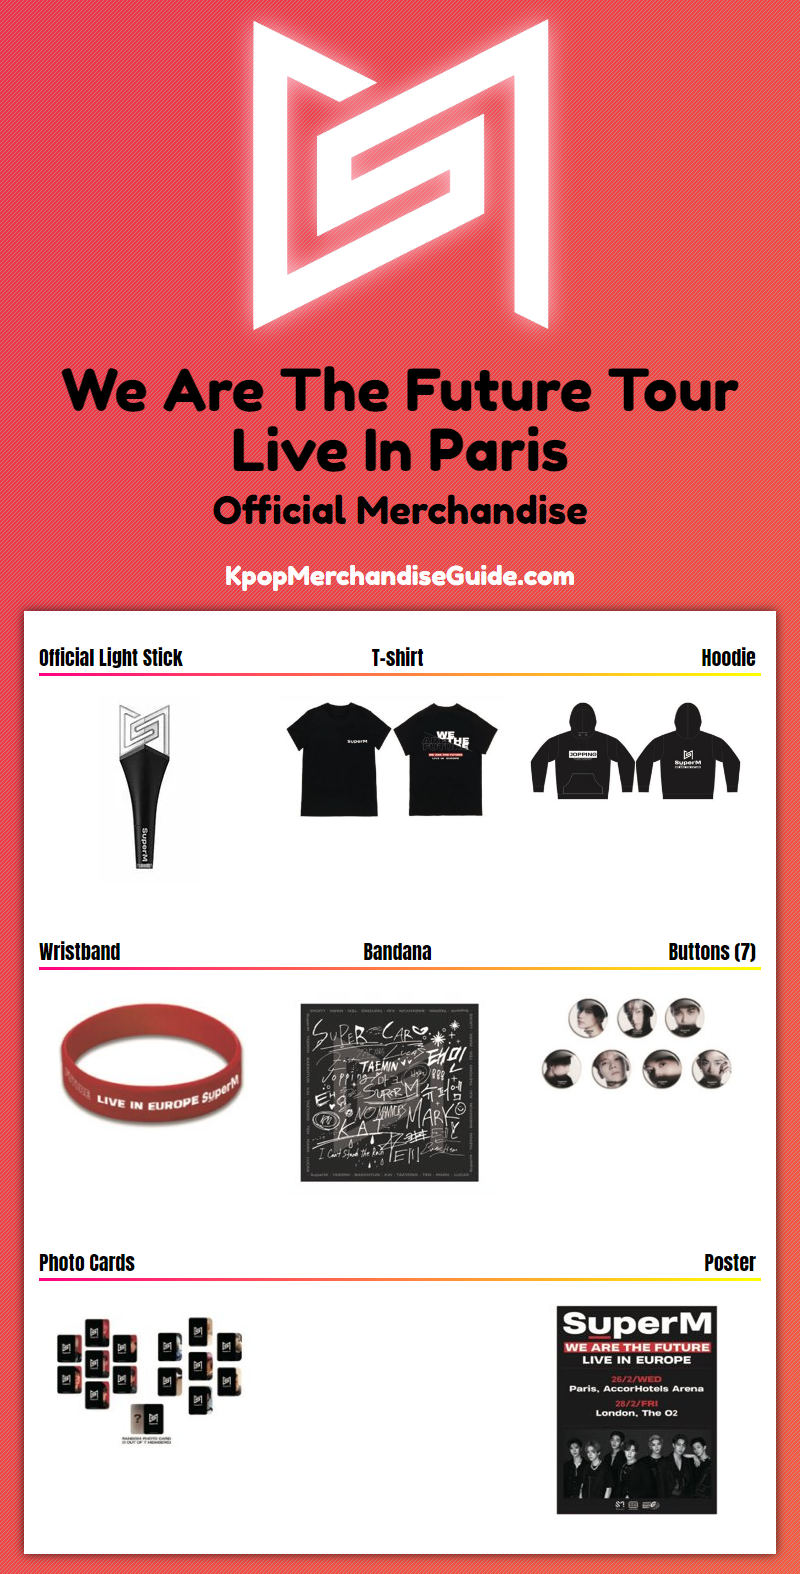 SuperM We Are The Future Tour In Paris Merchandise